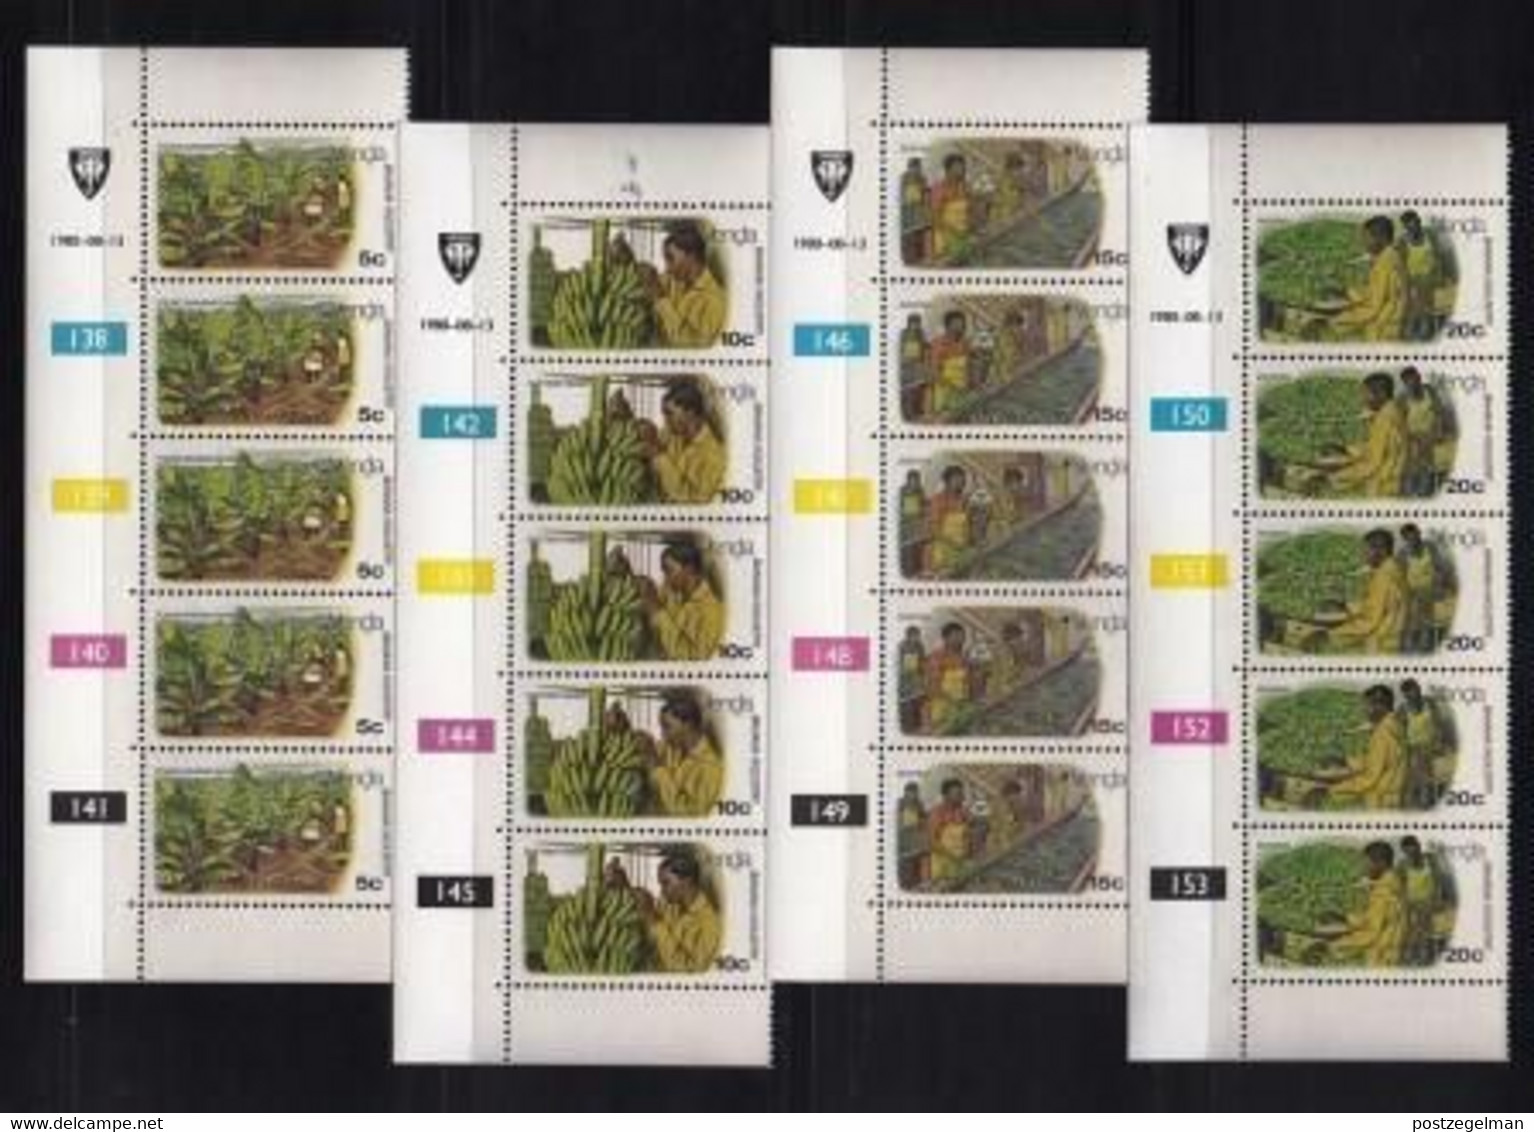 VENDA, 1980, Mint Never Hinged Stamps In Control Blocks, MI 30-33, Banana Cultivations, X304 - Venda